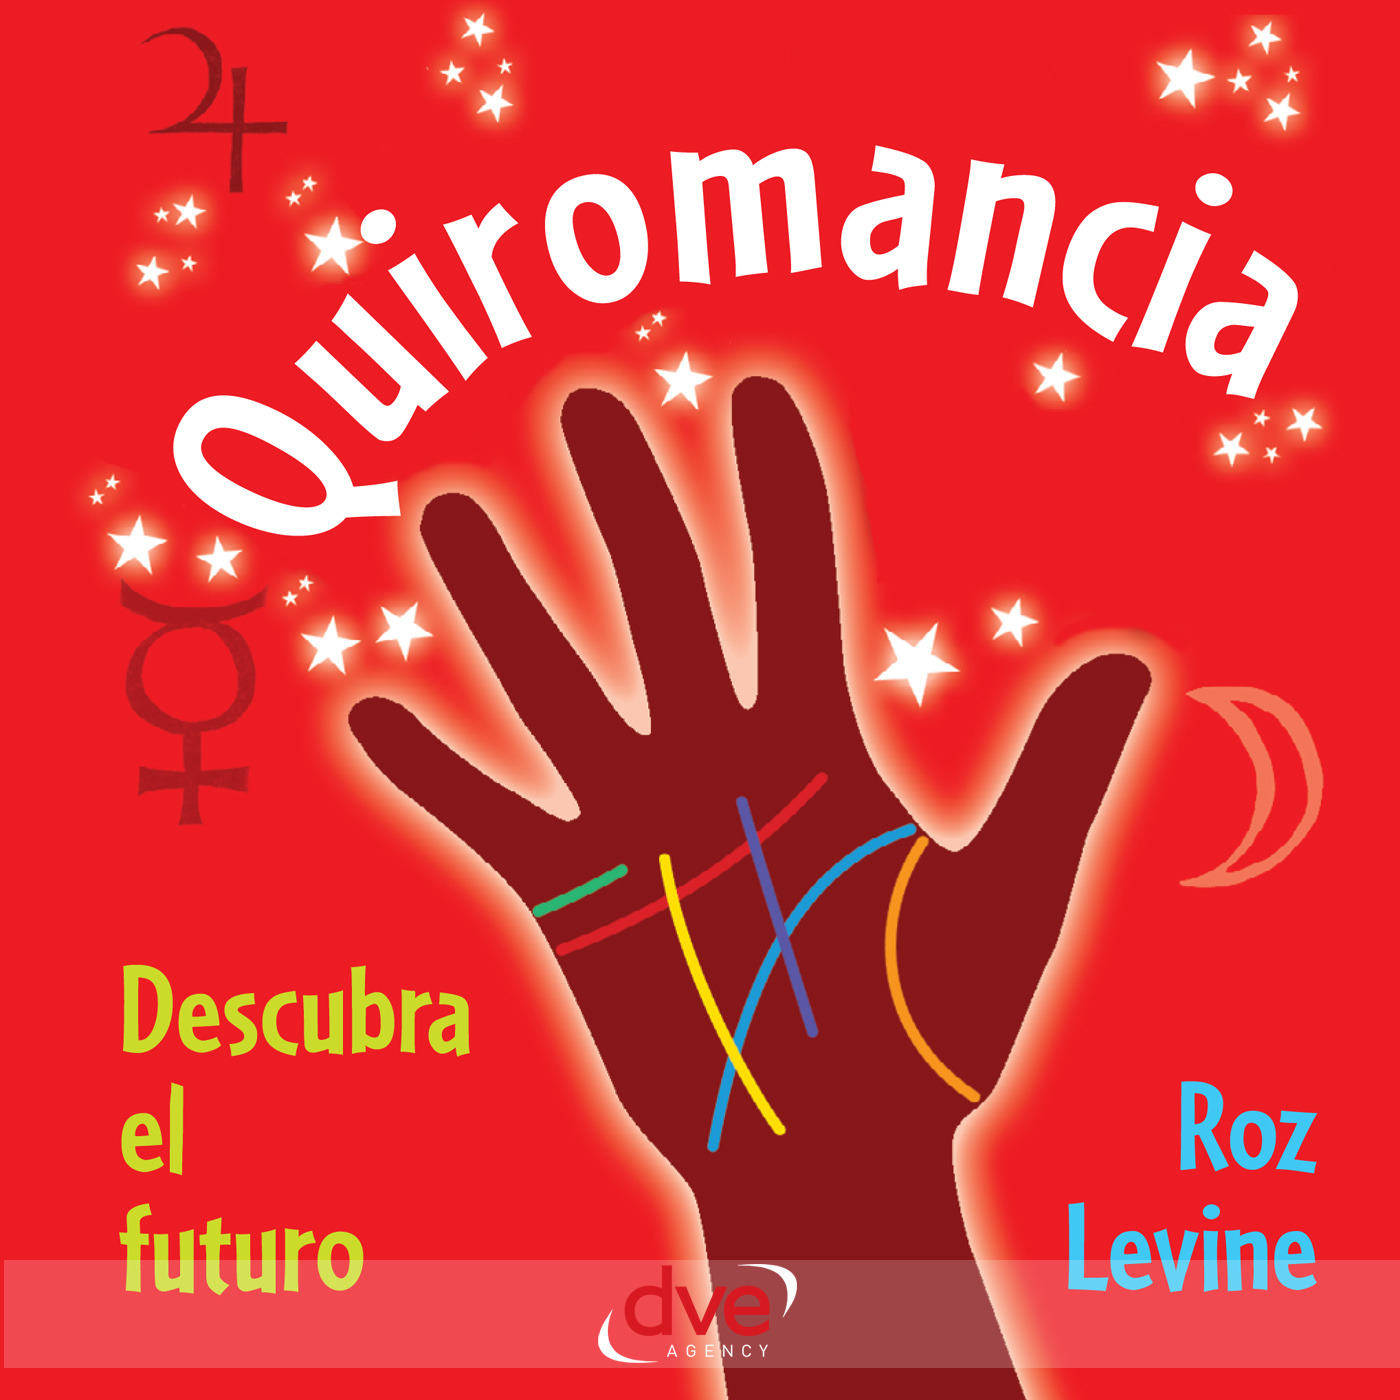 Levine, Roz - Quiromancia: descubra el futuro, ebook